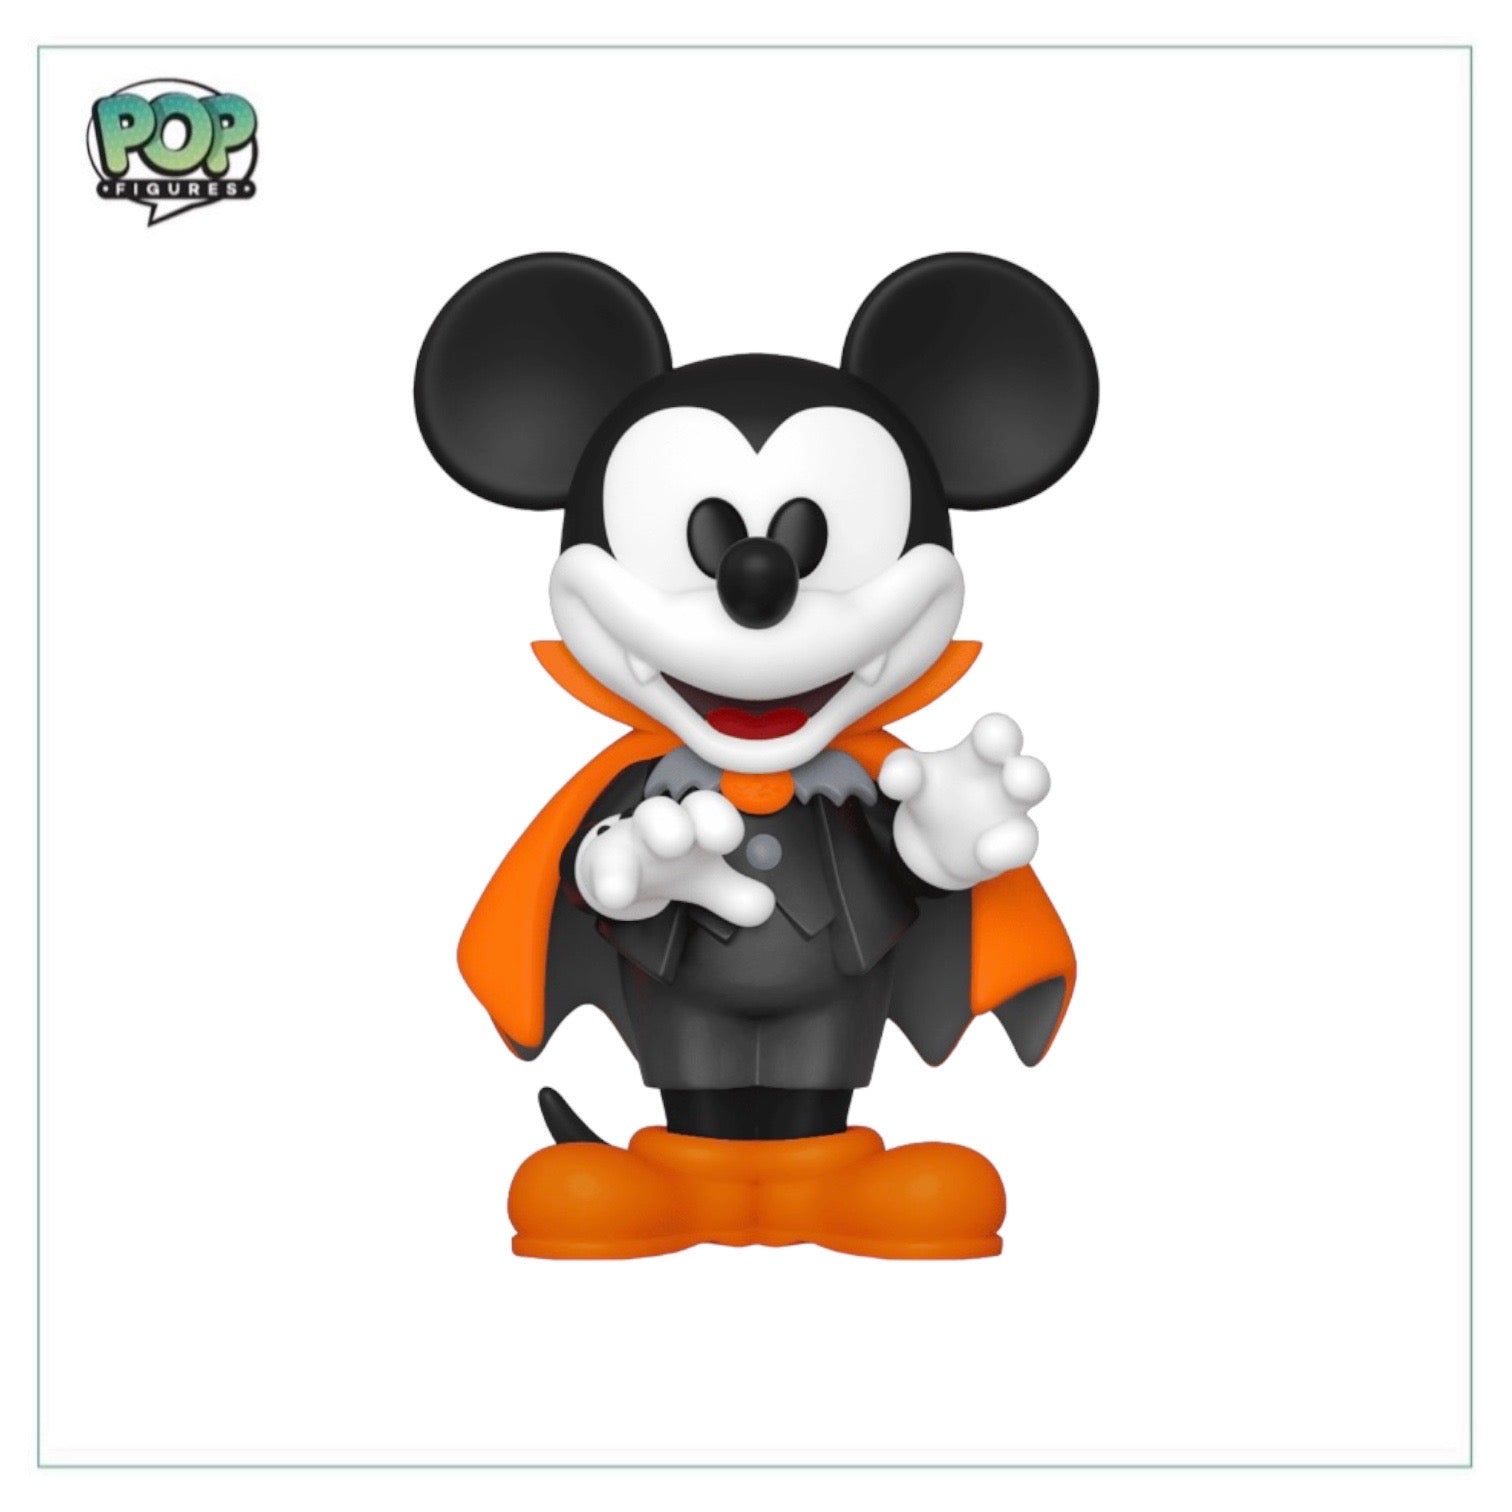 Vampire Mickey Funko Soda Vinyl Figure! - Disney - International LE12500 Pcs - Chance of Chase